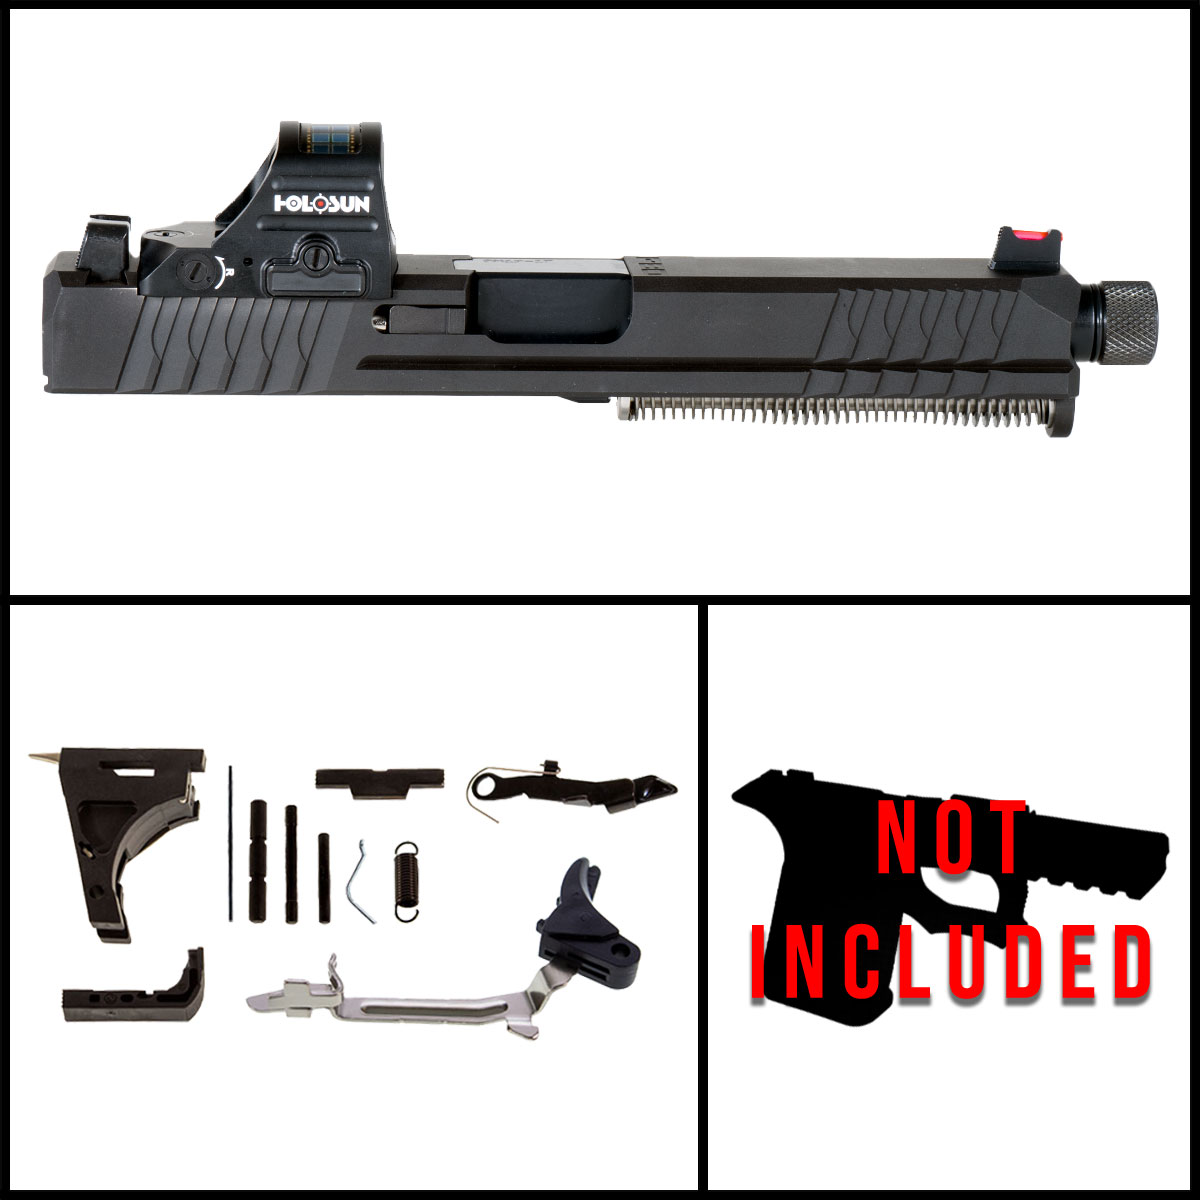 MMC 'Heartstone' 9mm Full Gun Kit (Everything minus Frame) - Glock 17 Gen 1-3 Compatible